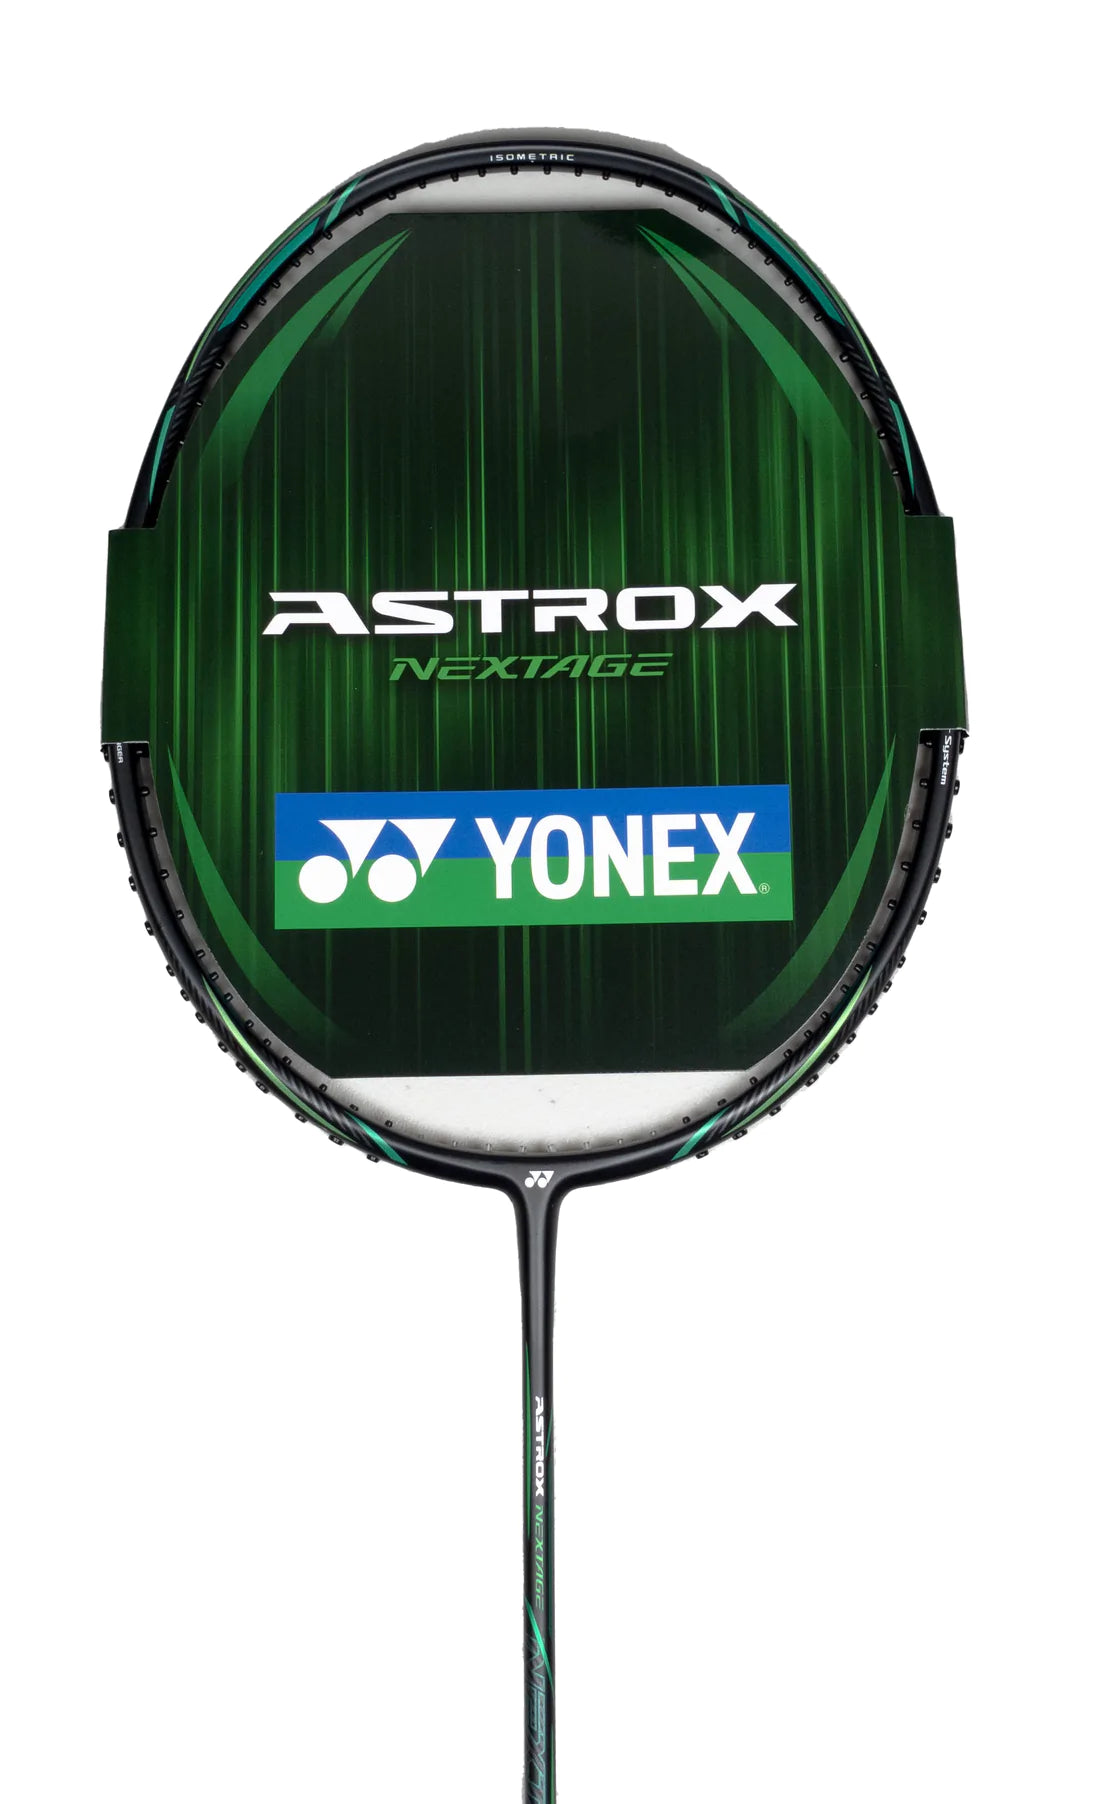 Yonex Astrox Nextage Badminton Racket - TriplePointSports